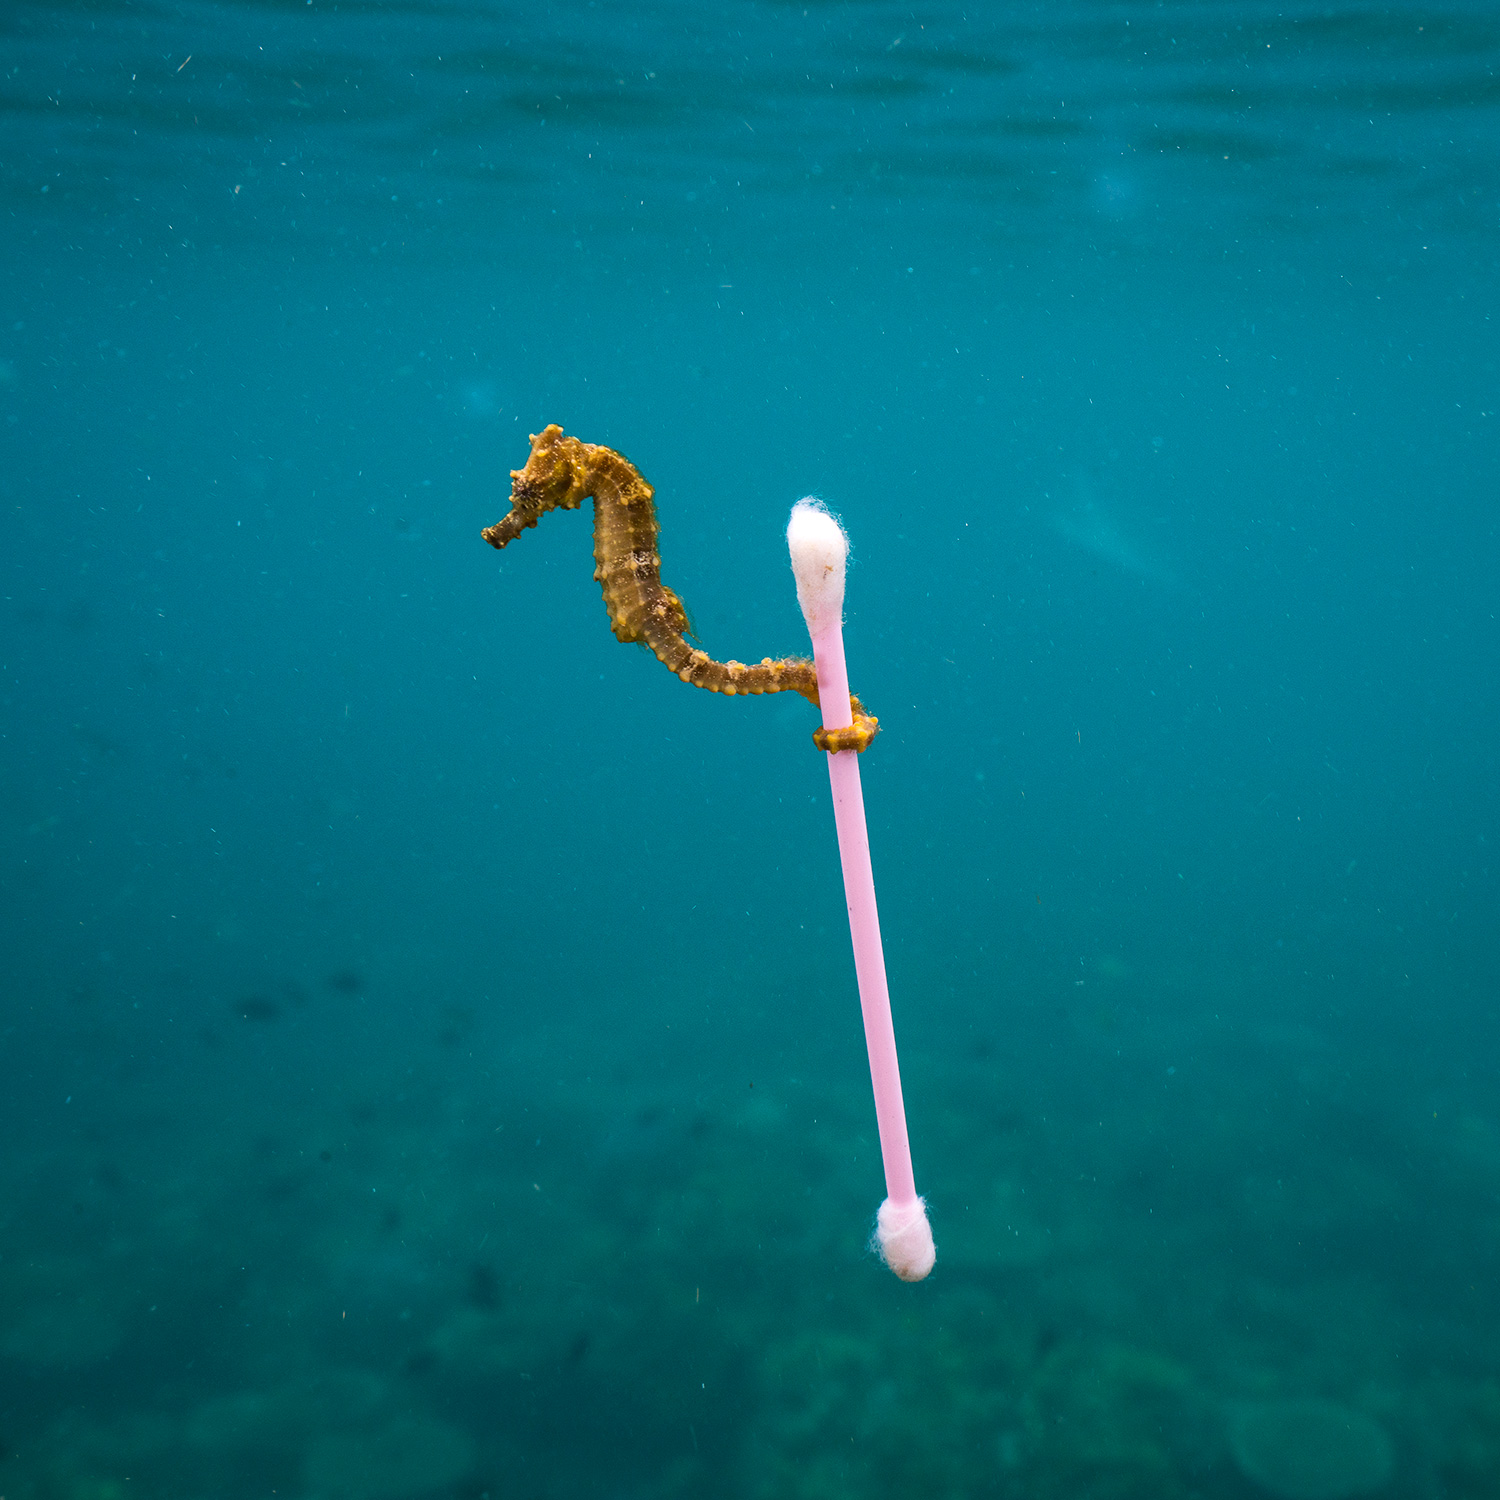 'Sewage surfer' by Justin Hofman, USA © Justin Hofman